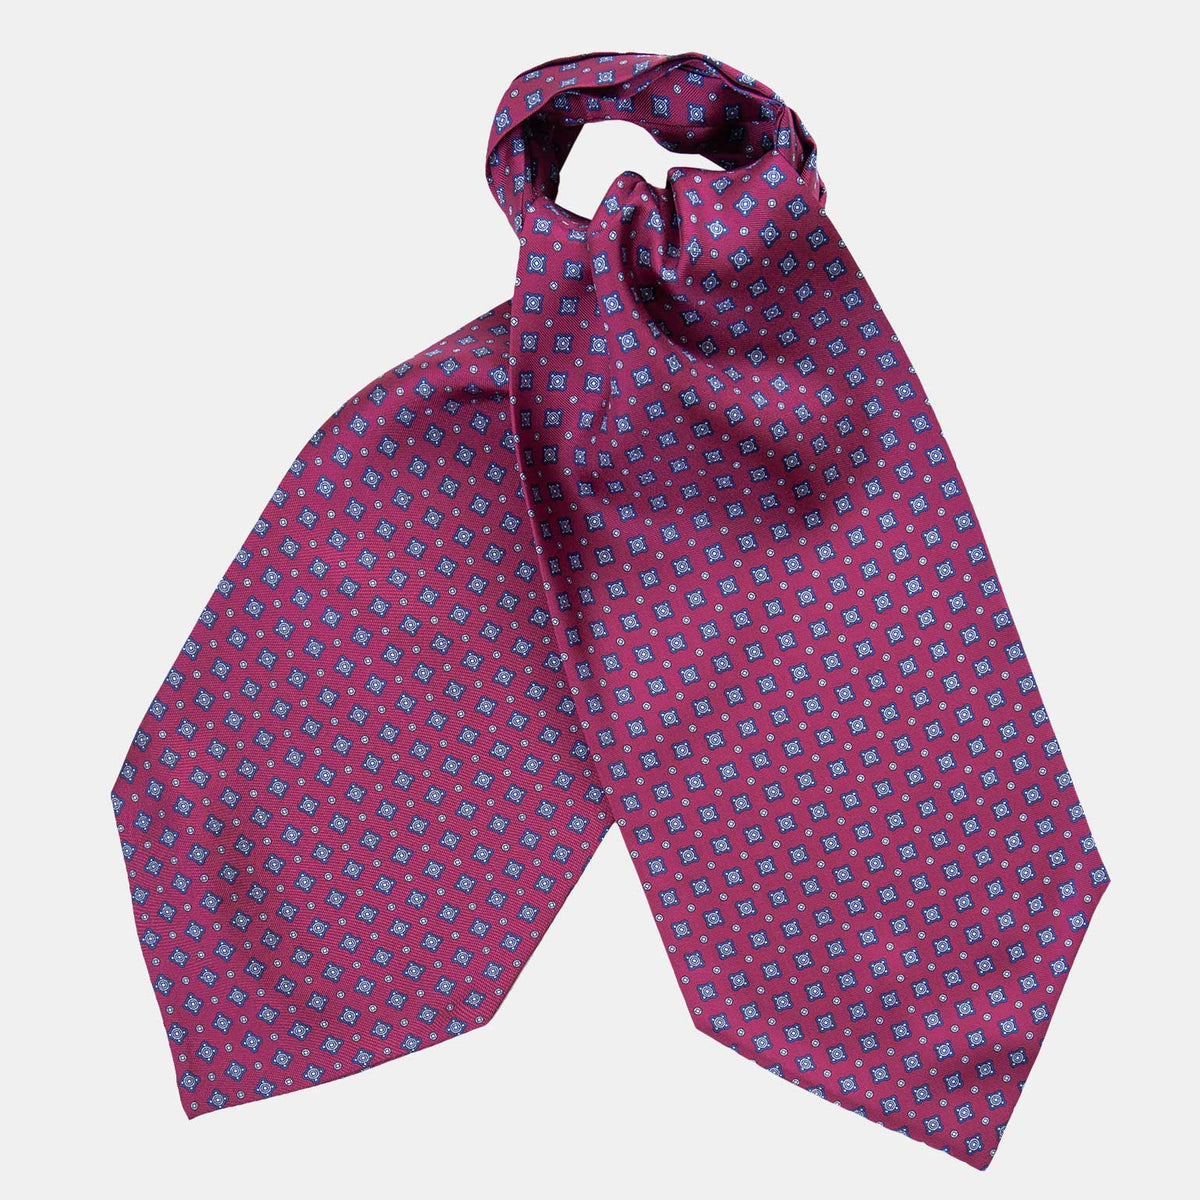 Magenta Silk Ascot Tie - Handmade in Italy